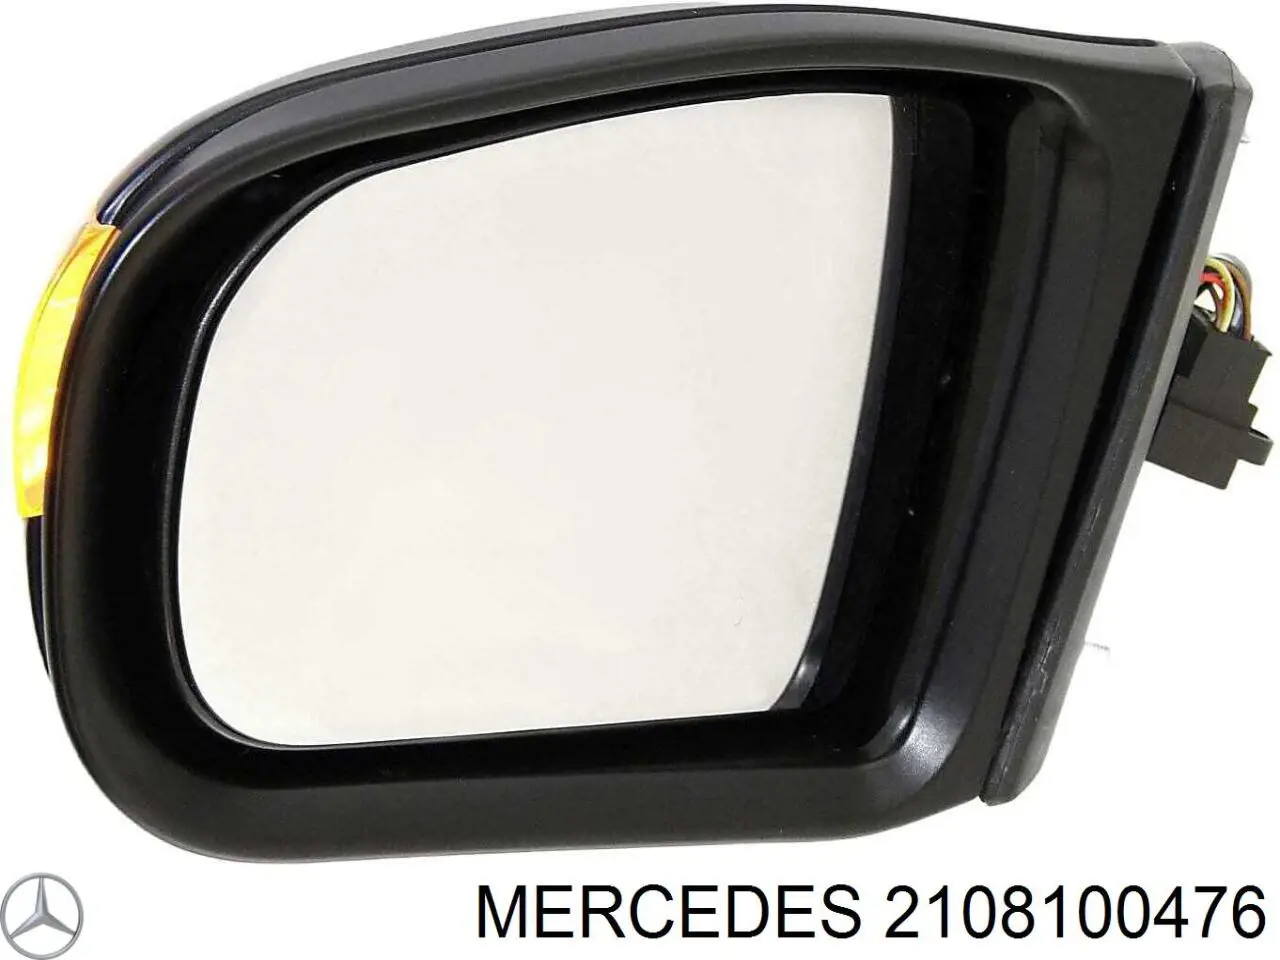 2108100476 Mercedes espejo retrovisor derecho